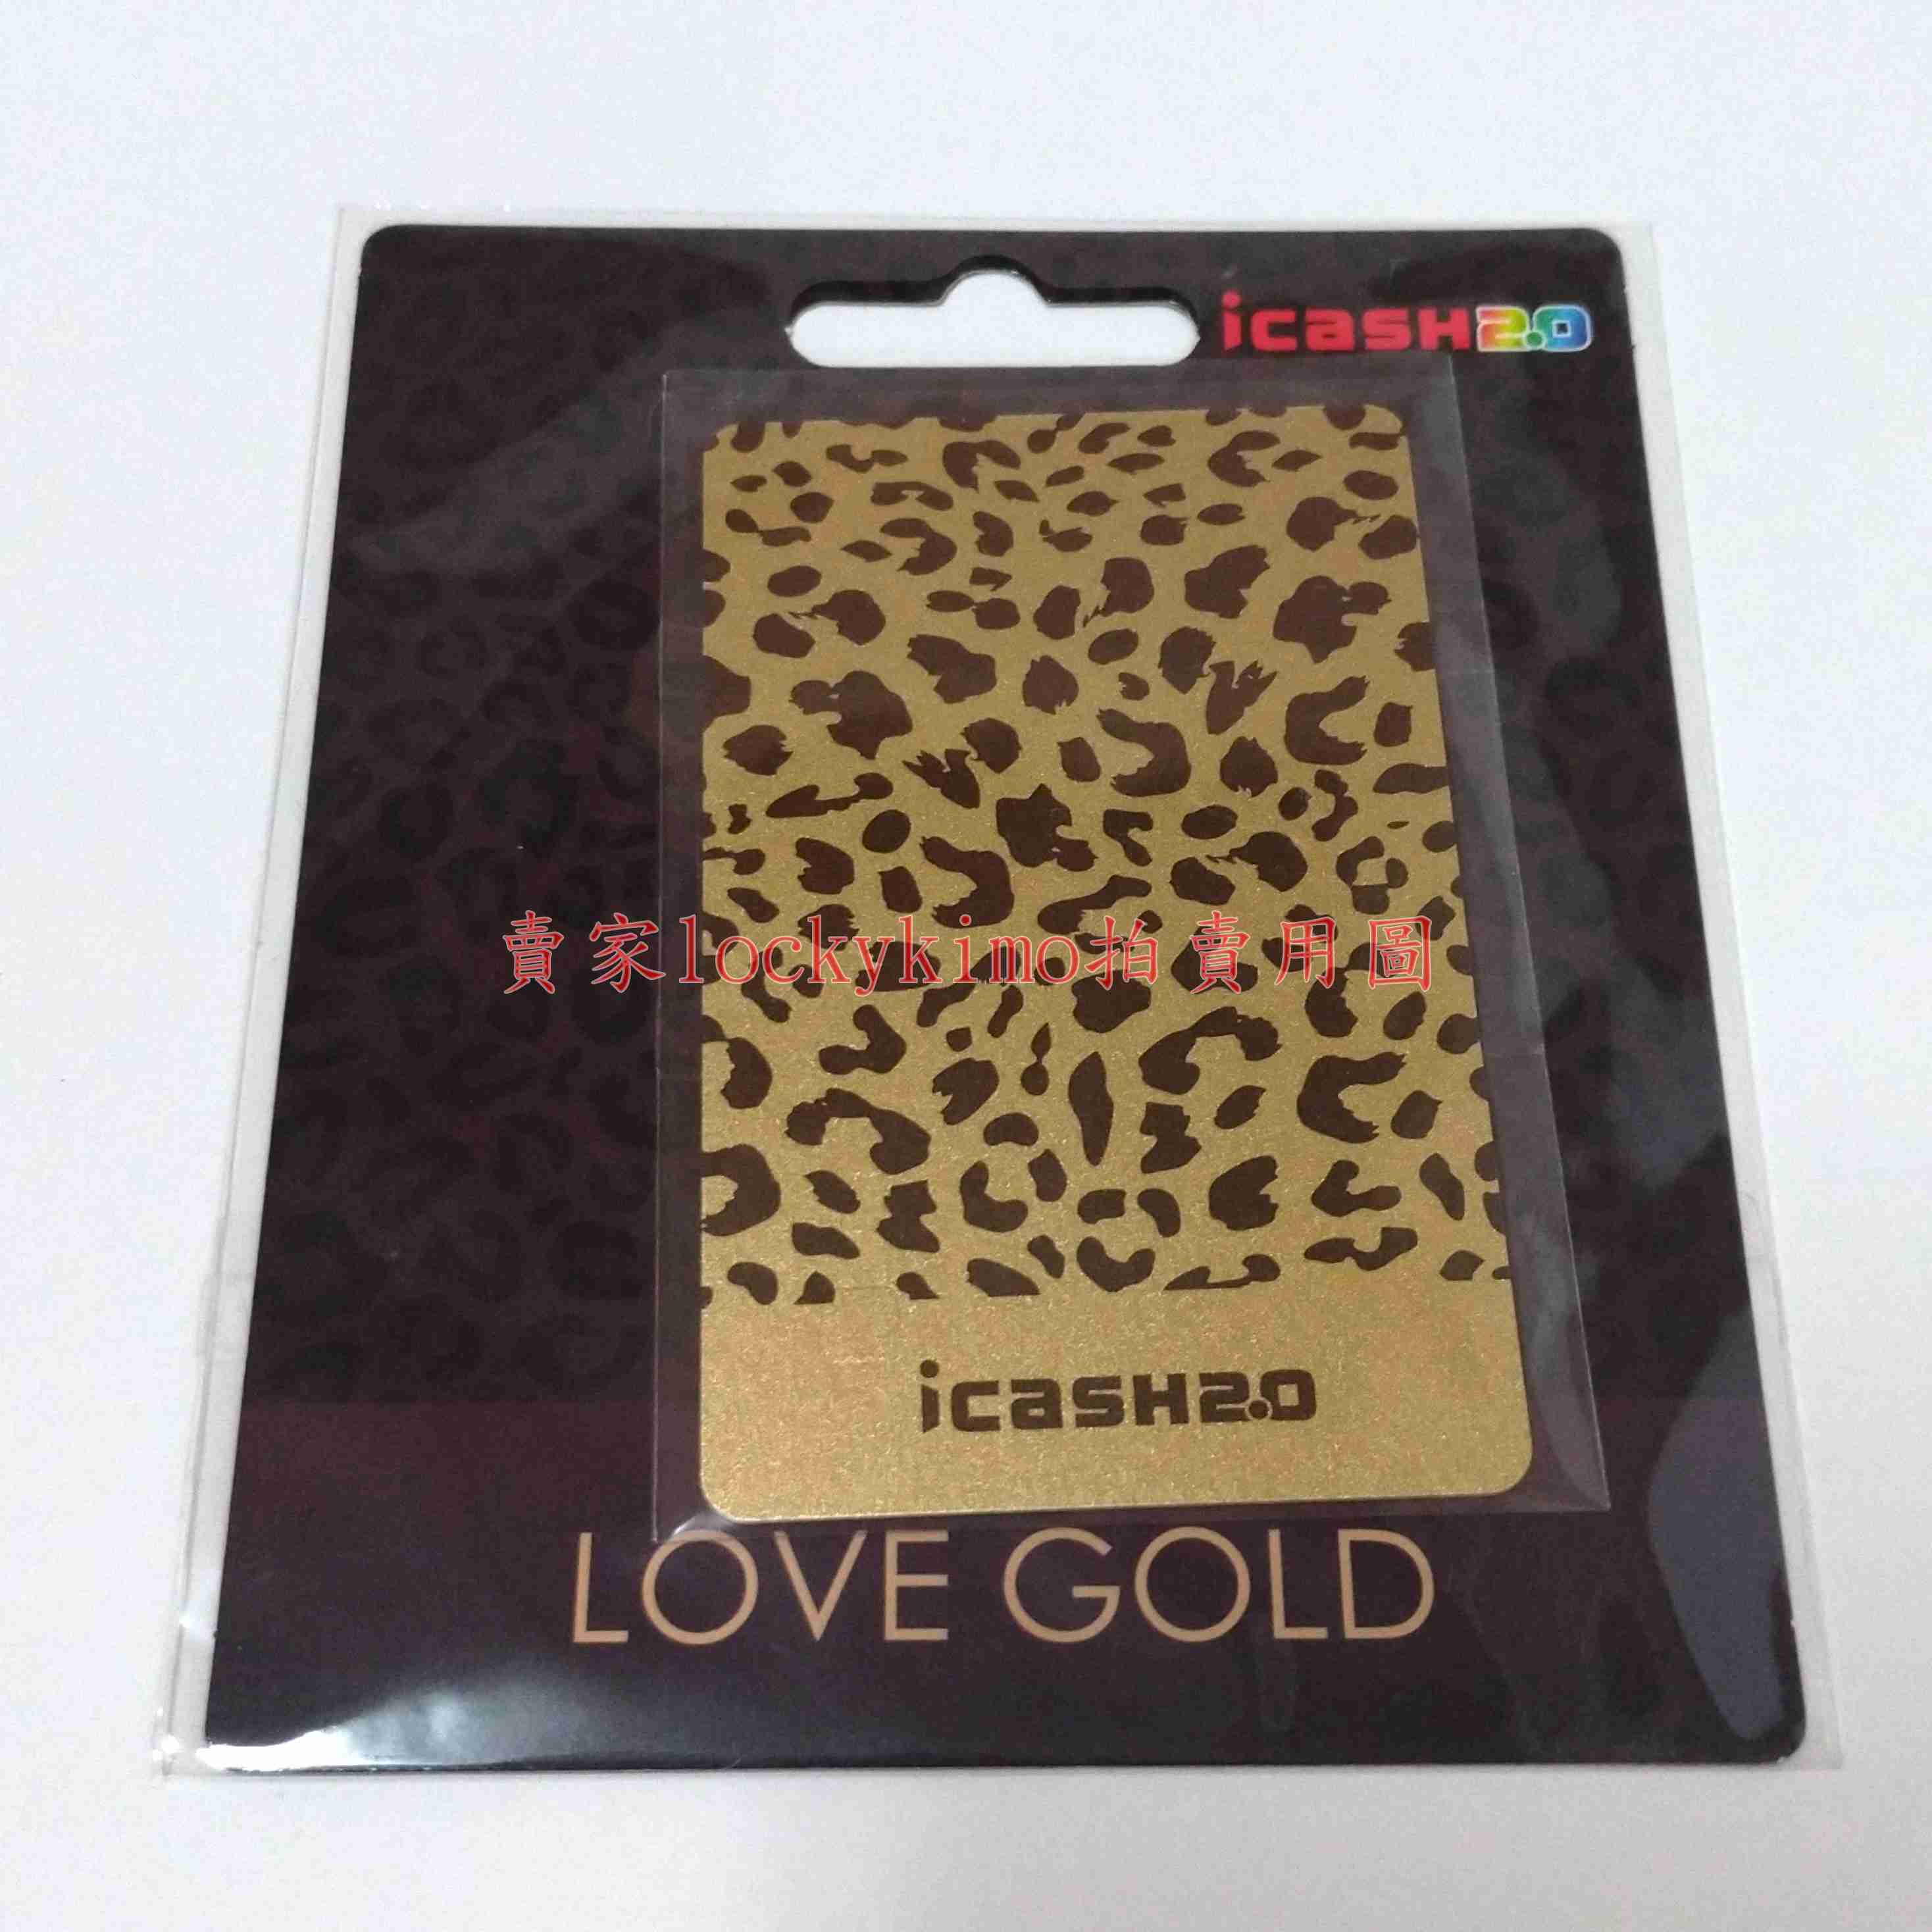 【LOVE GOLD Wild icash 2.0 空卡】卡片 珍藏卡 收藏卡 豹紋 風格 愛金卡 特殊卡面 狂野風格